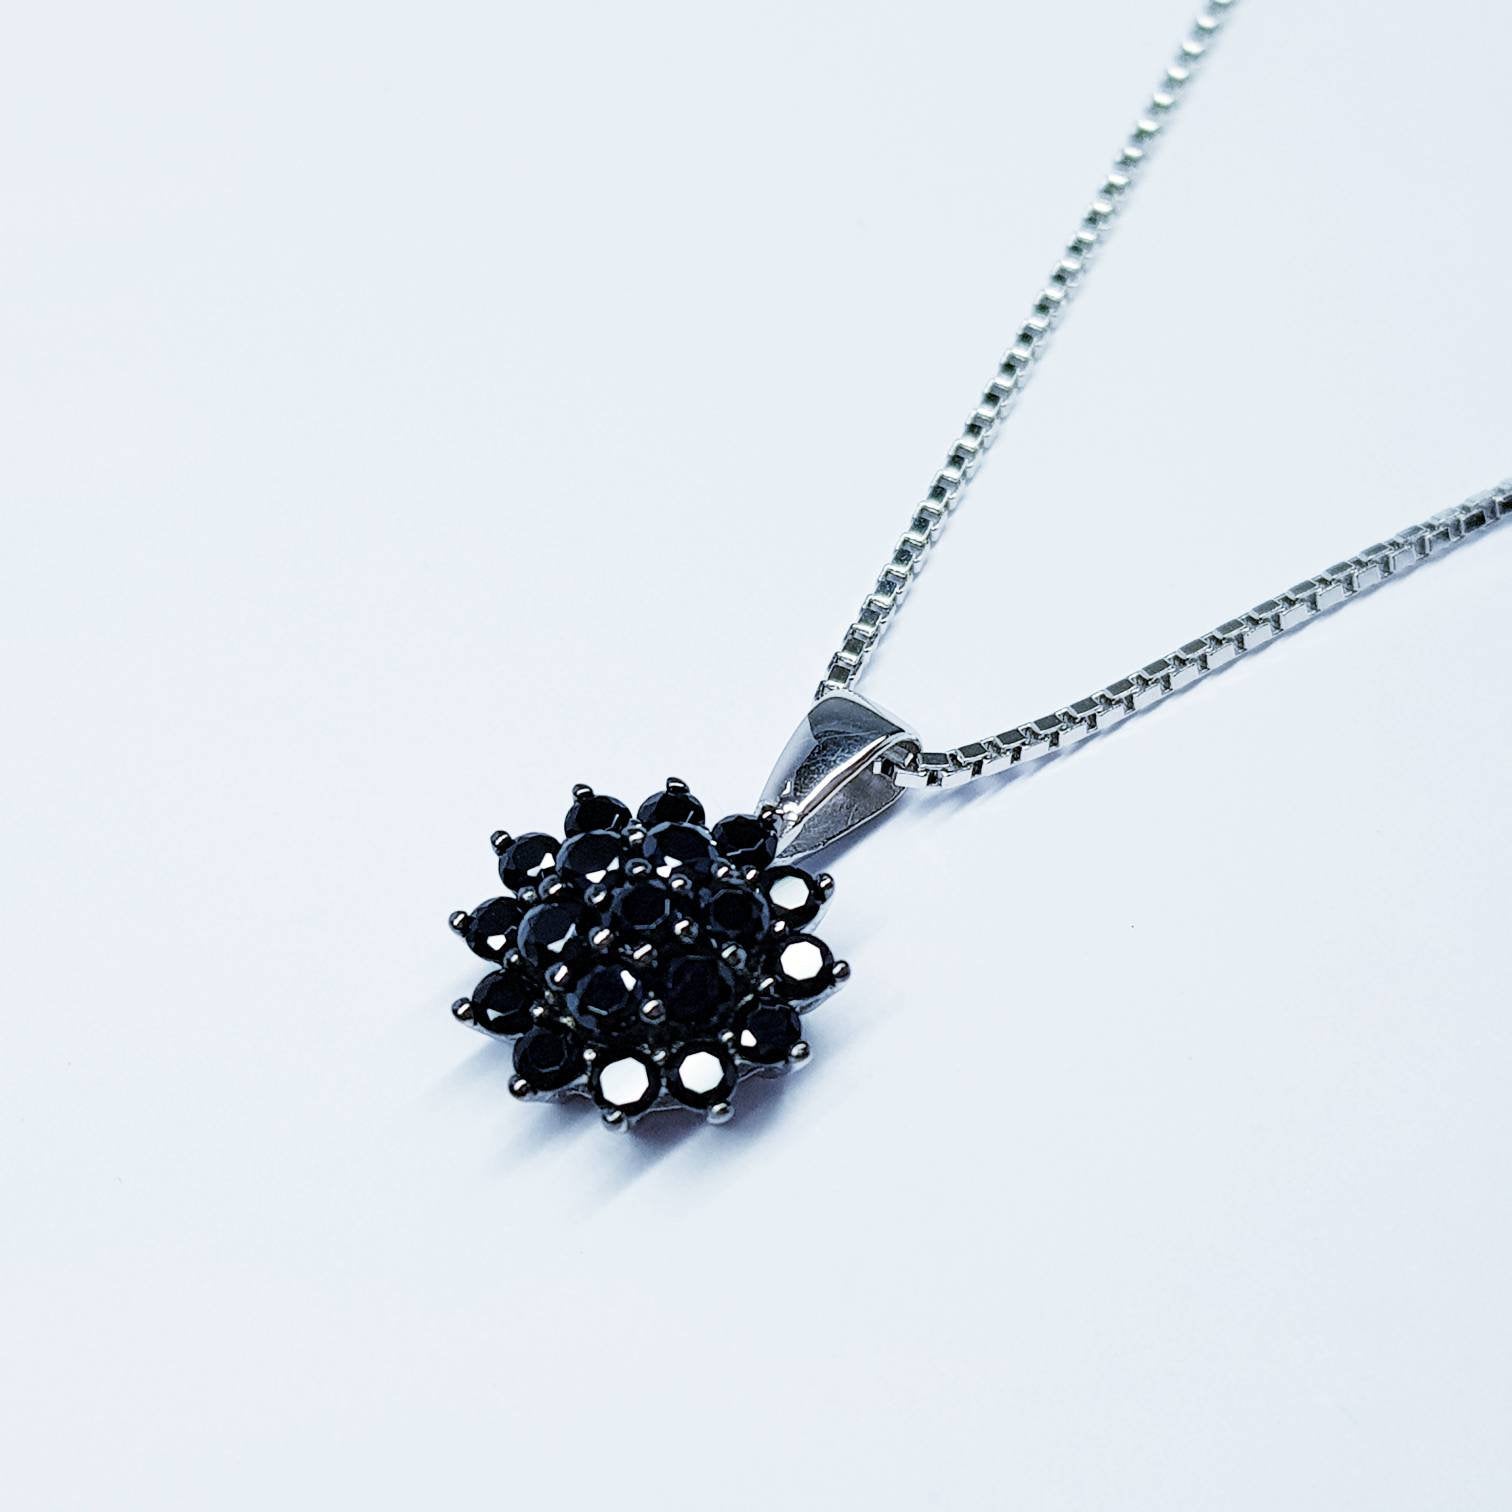 Sterling silver black necklace, small black pendant, Vintage necklace, antique style pendant